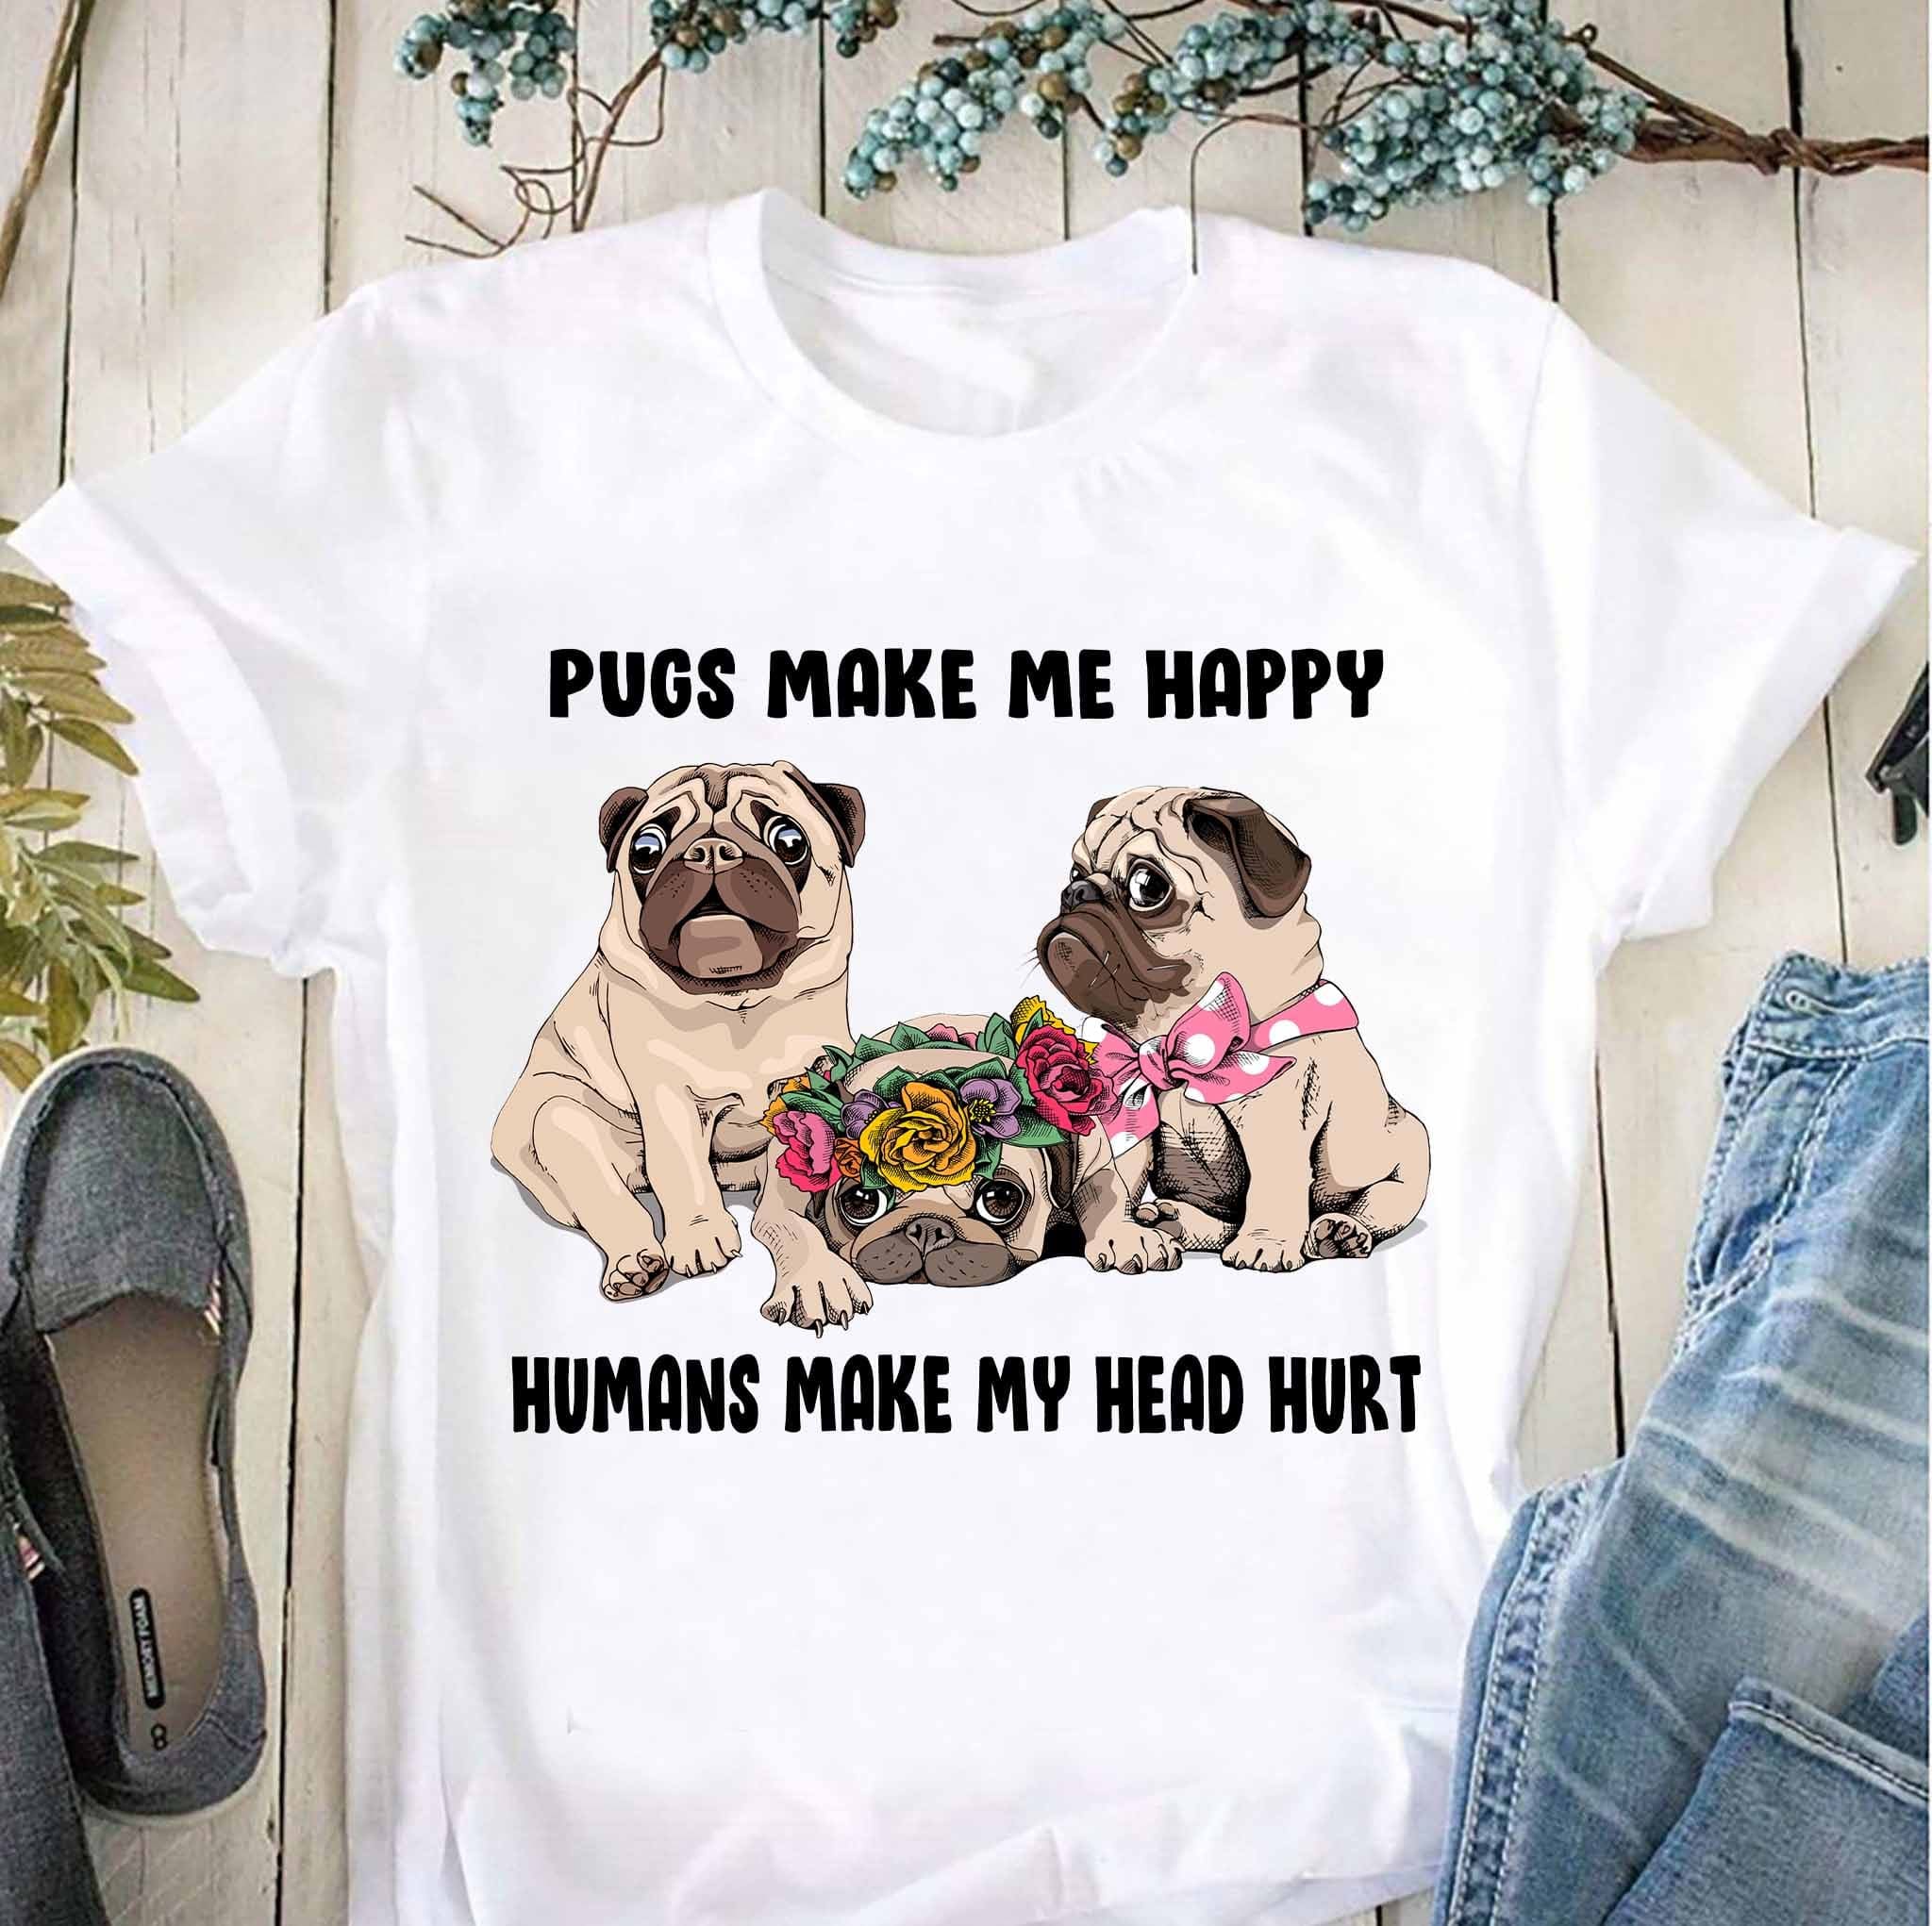 Pugs make me happy, humans make my head hurt - Gorgeous Pug puppy